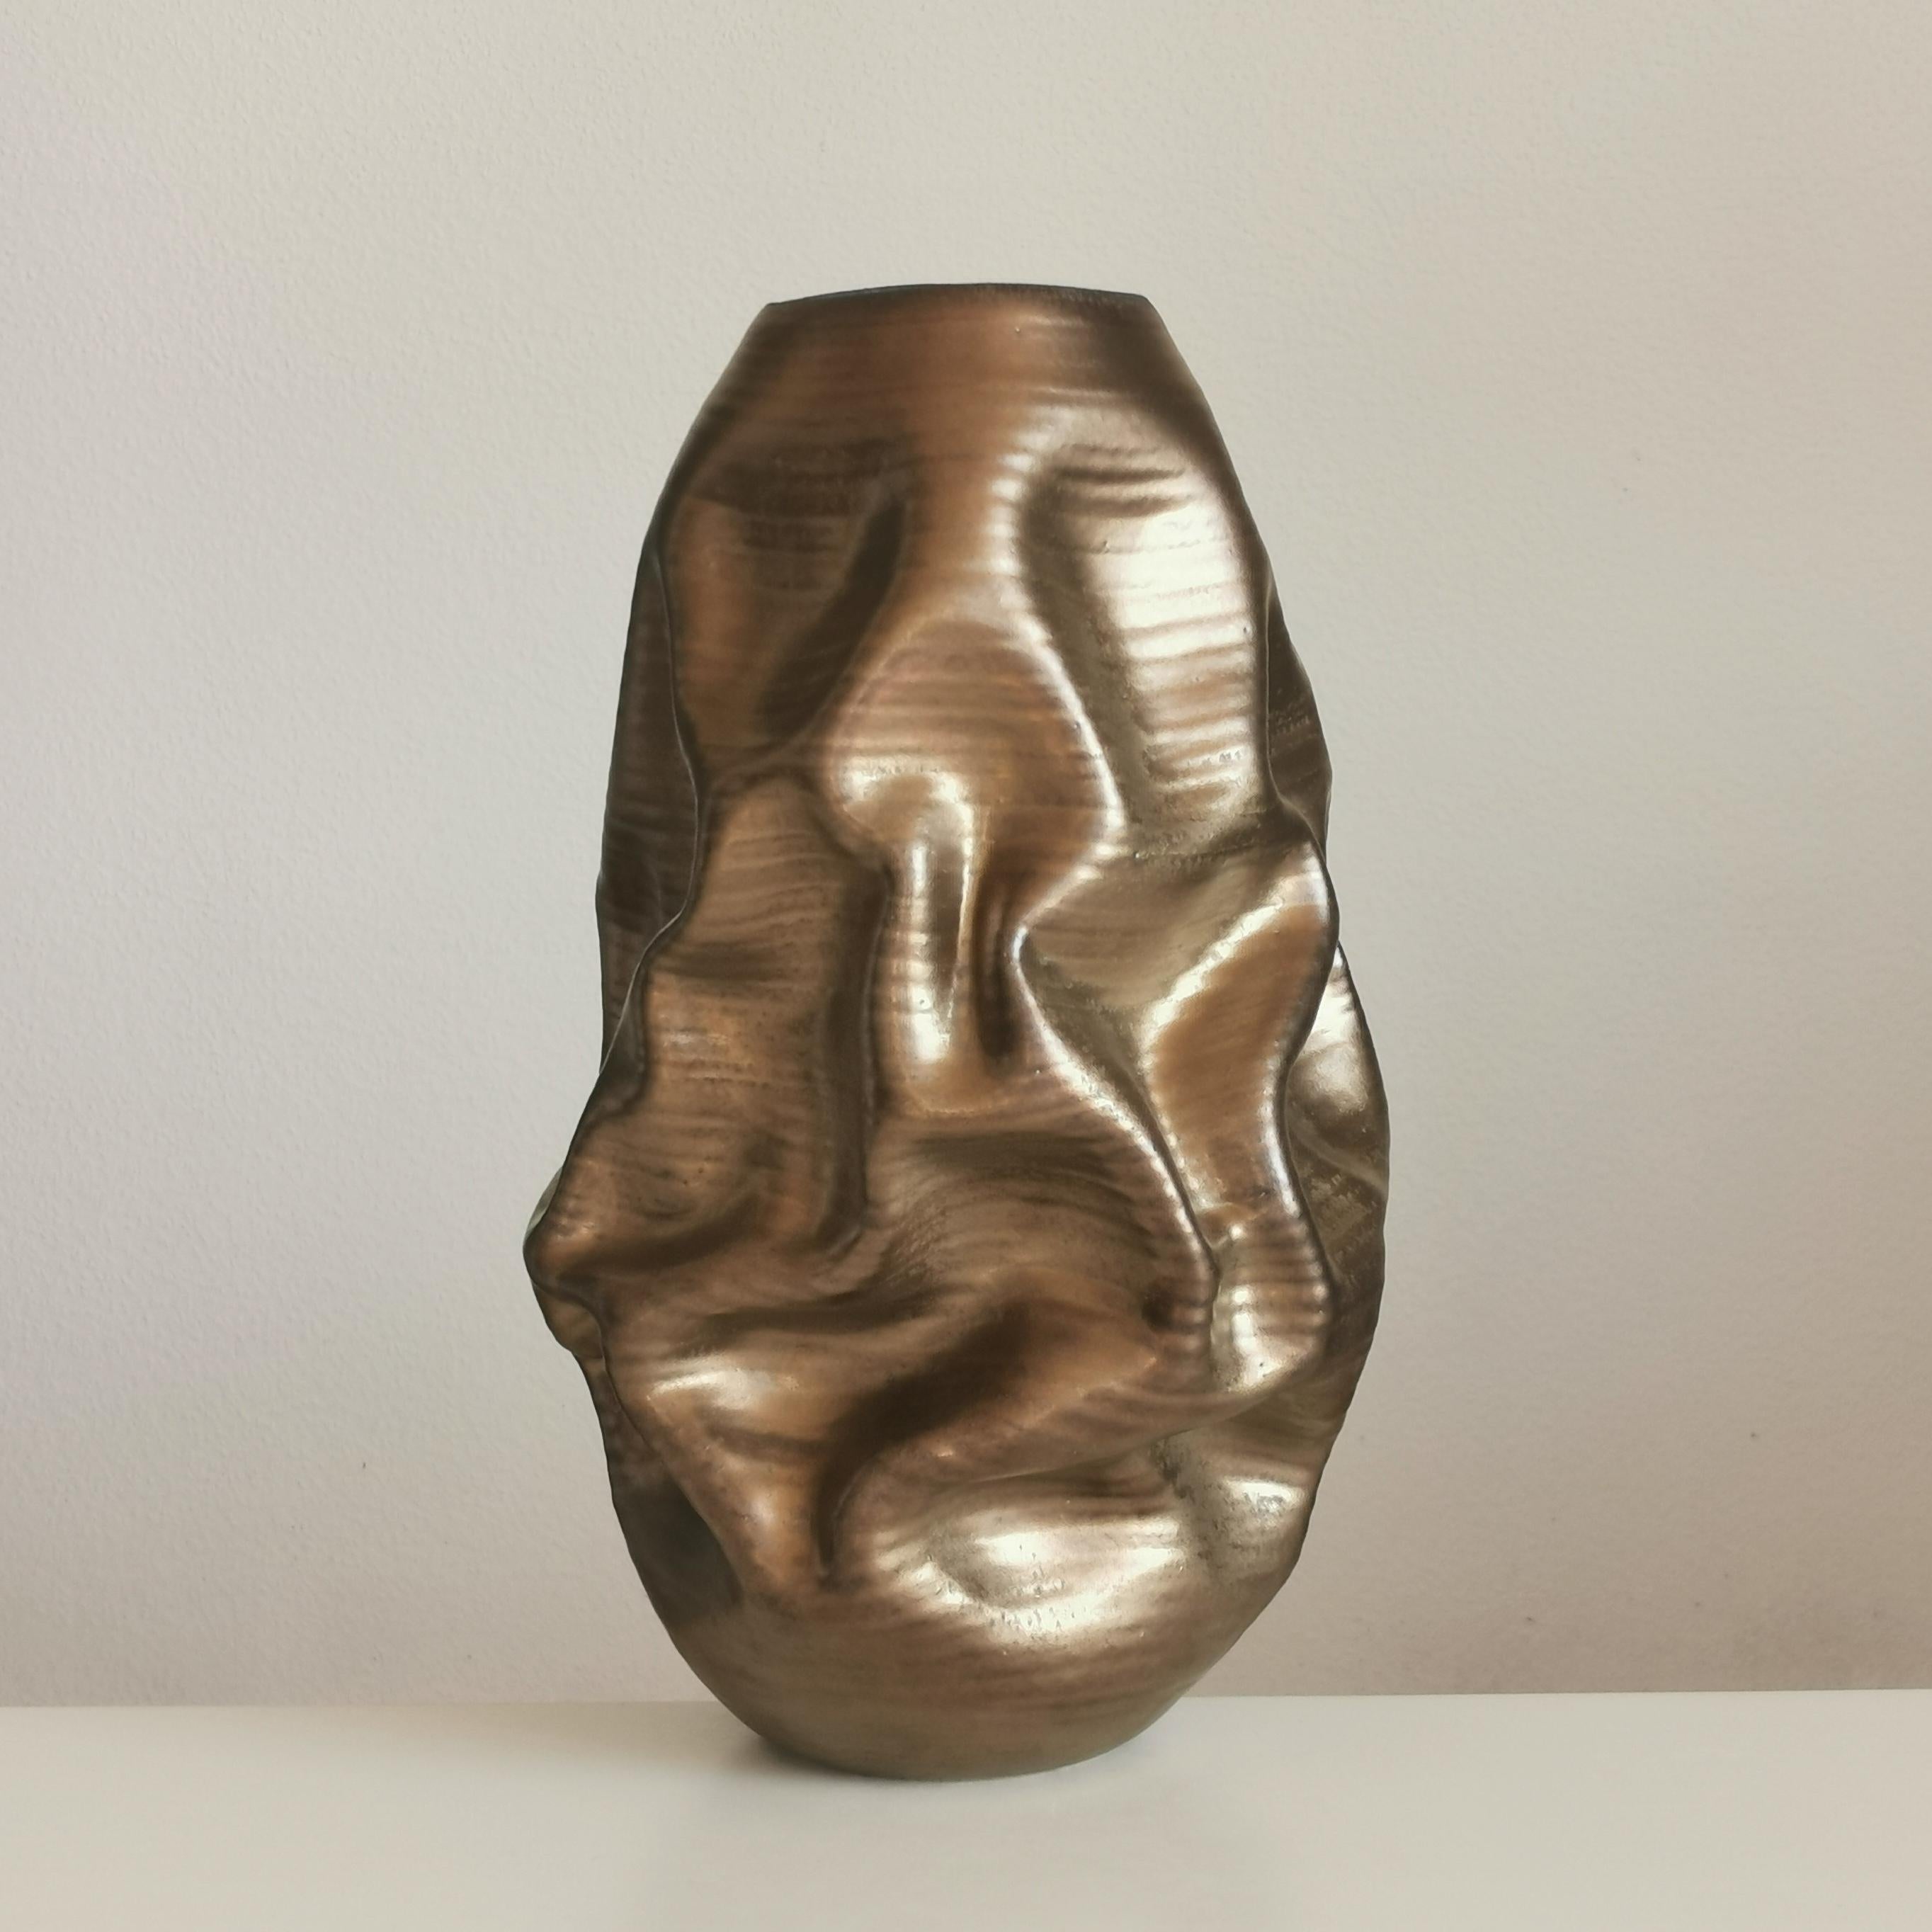 Spanish Tall Golden Crumpled Form N.97, Medium Ceramic Sculpture, Objet D'Art